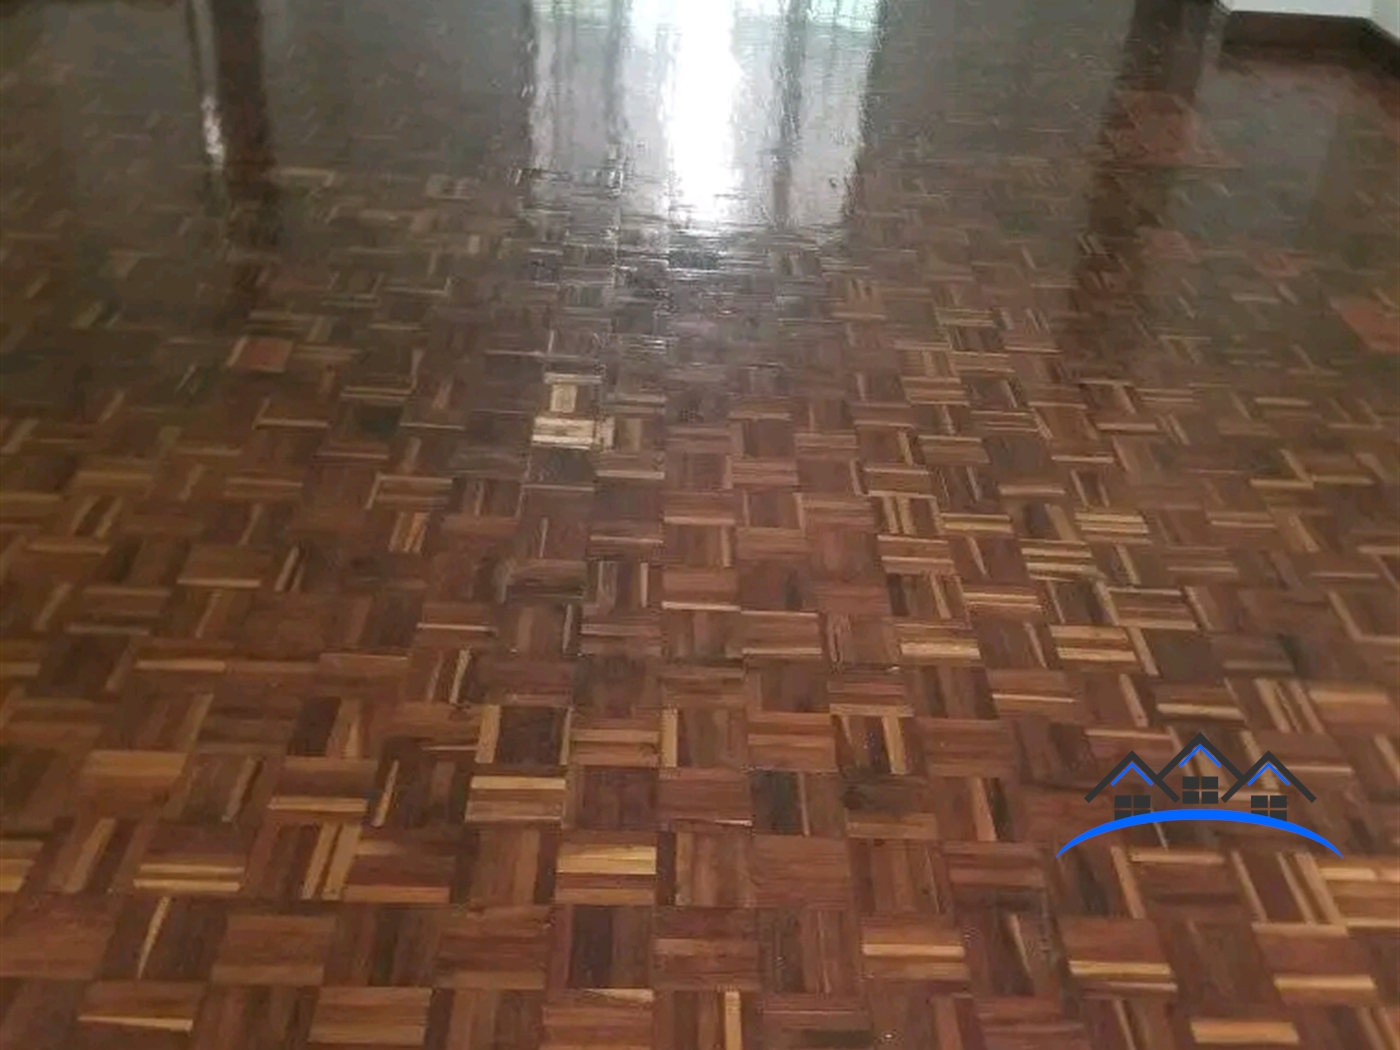 Floor/House plan